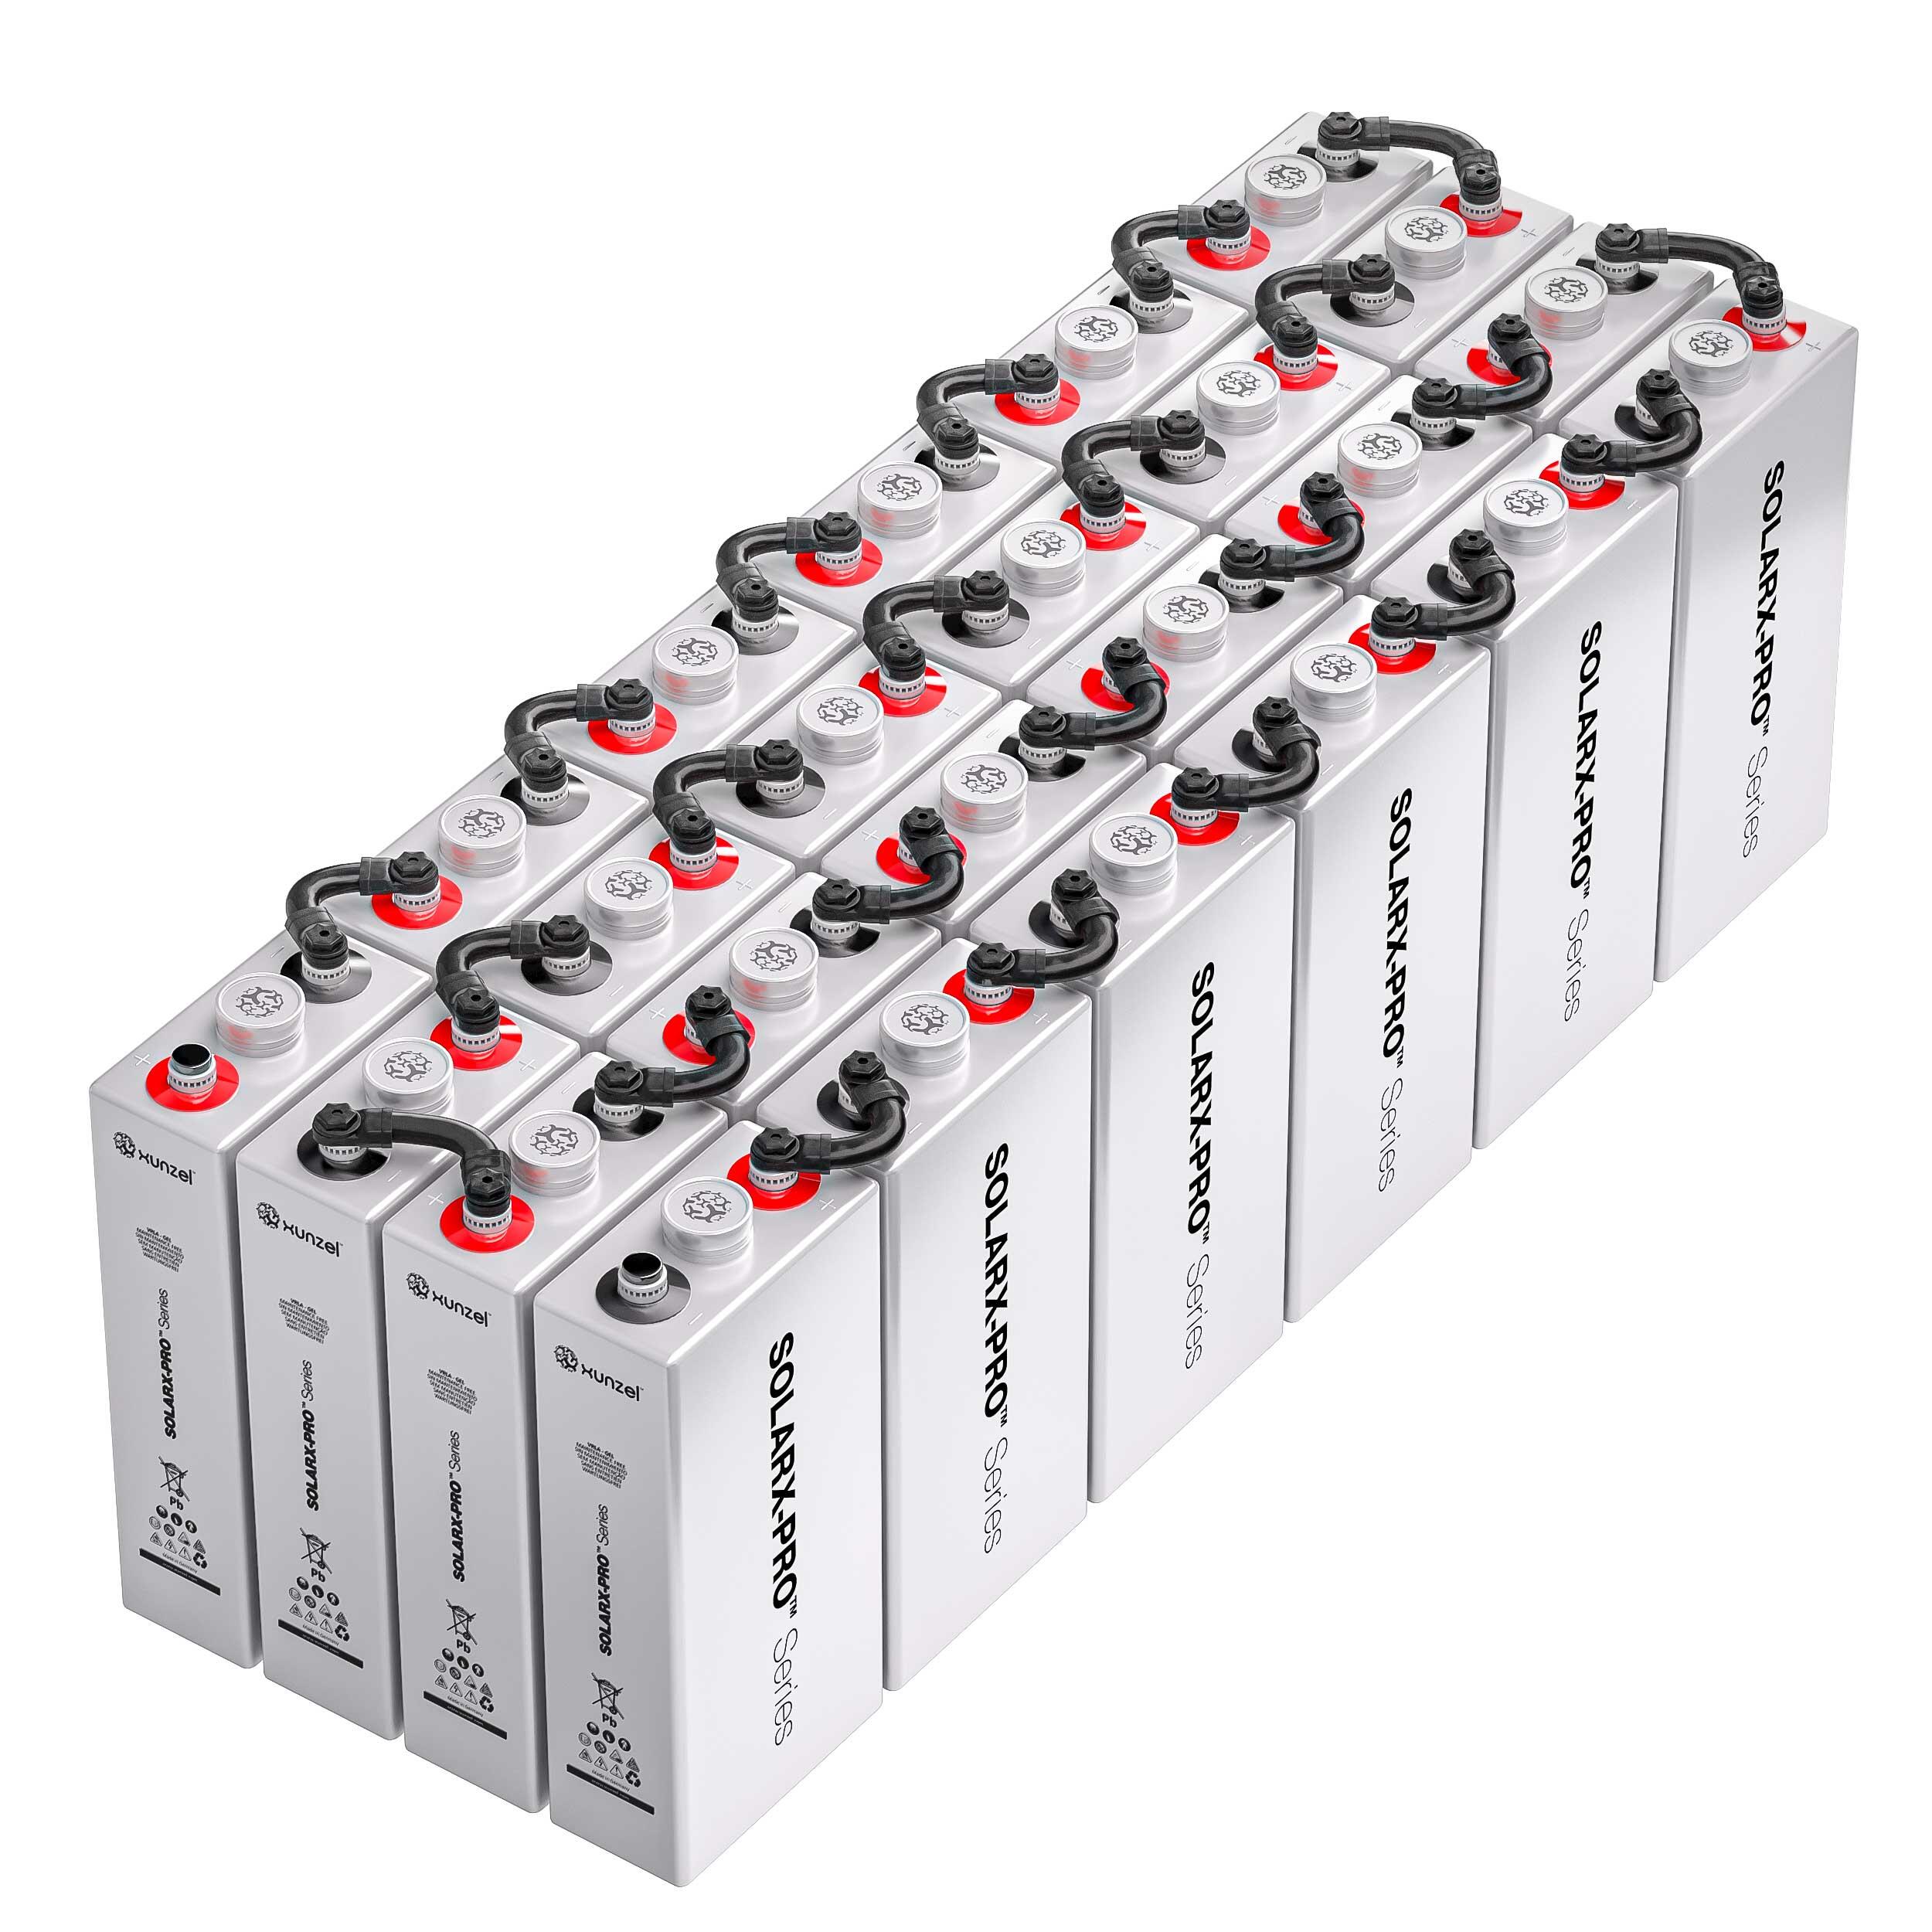 Banco de baterías solarx-pro-318b24 xunzel 48v 318ah 15,1kwh sin mantenimiento